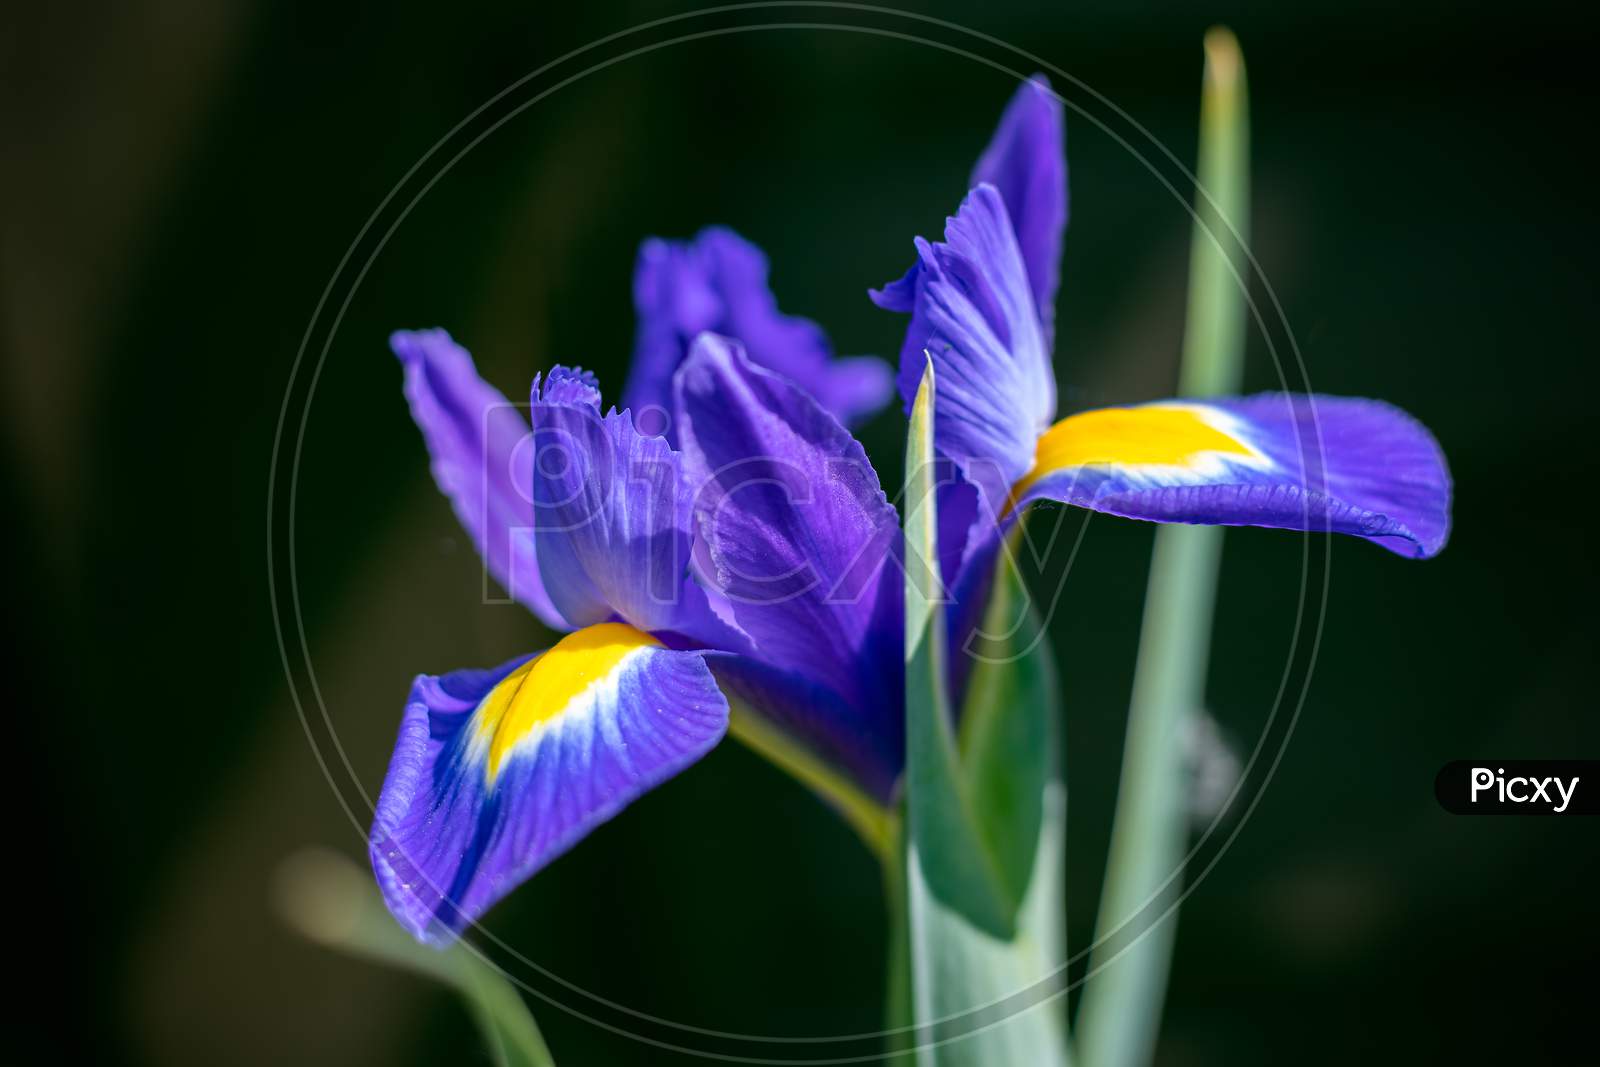 Iris Flower Blooming  In Springtime In An English Garden